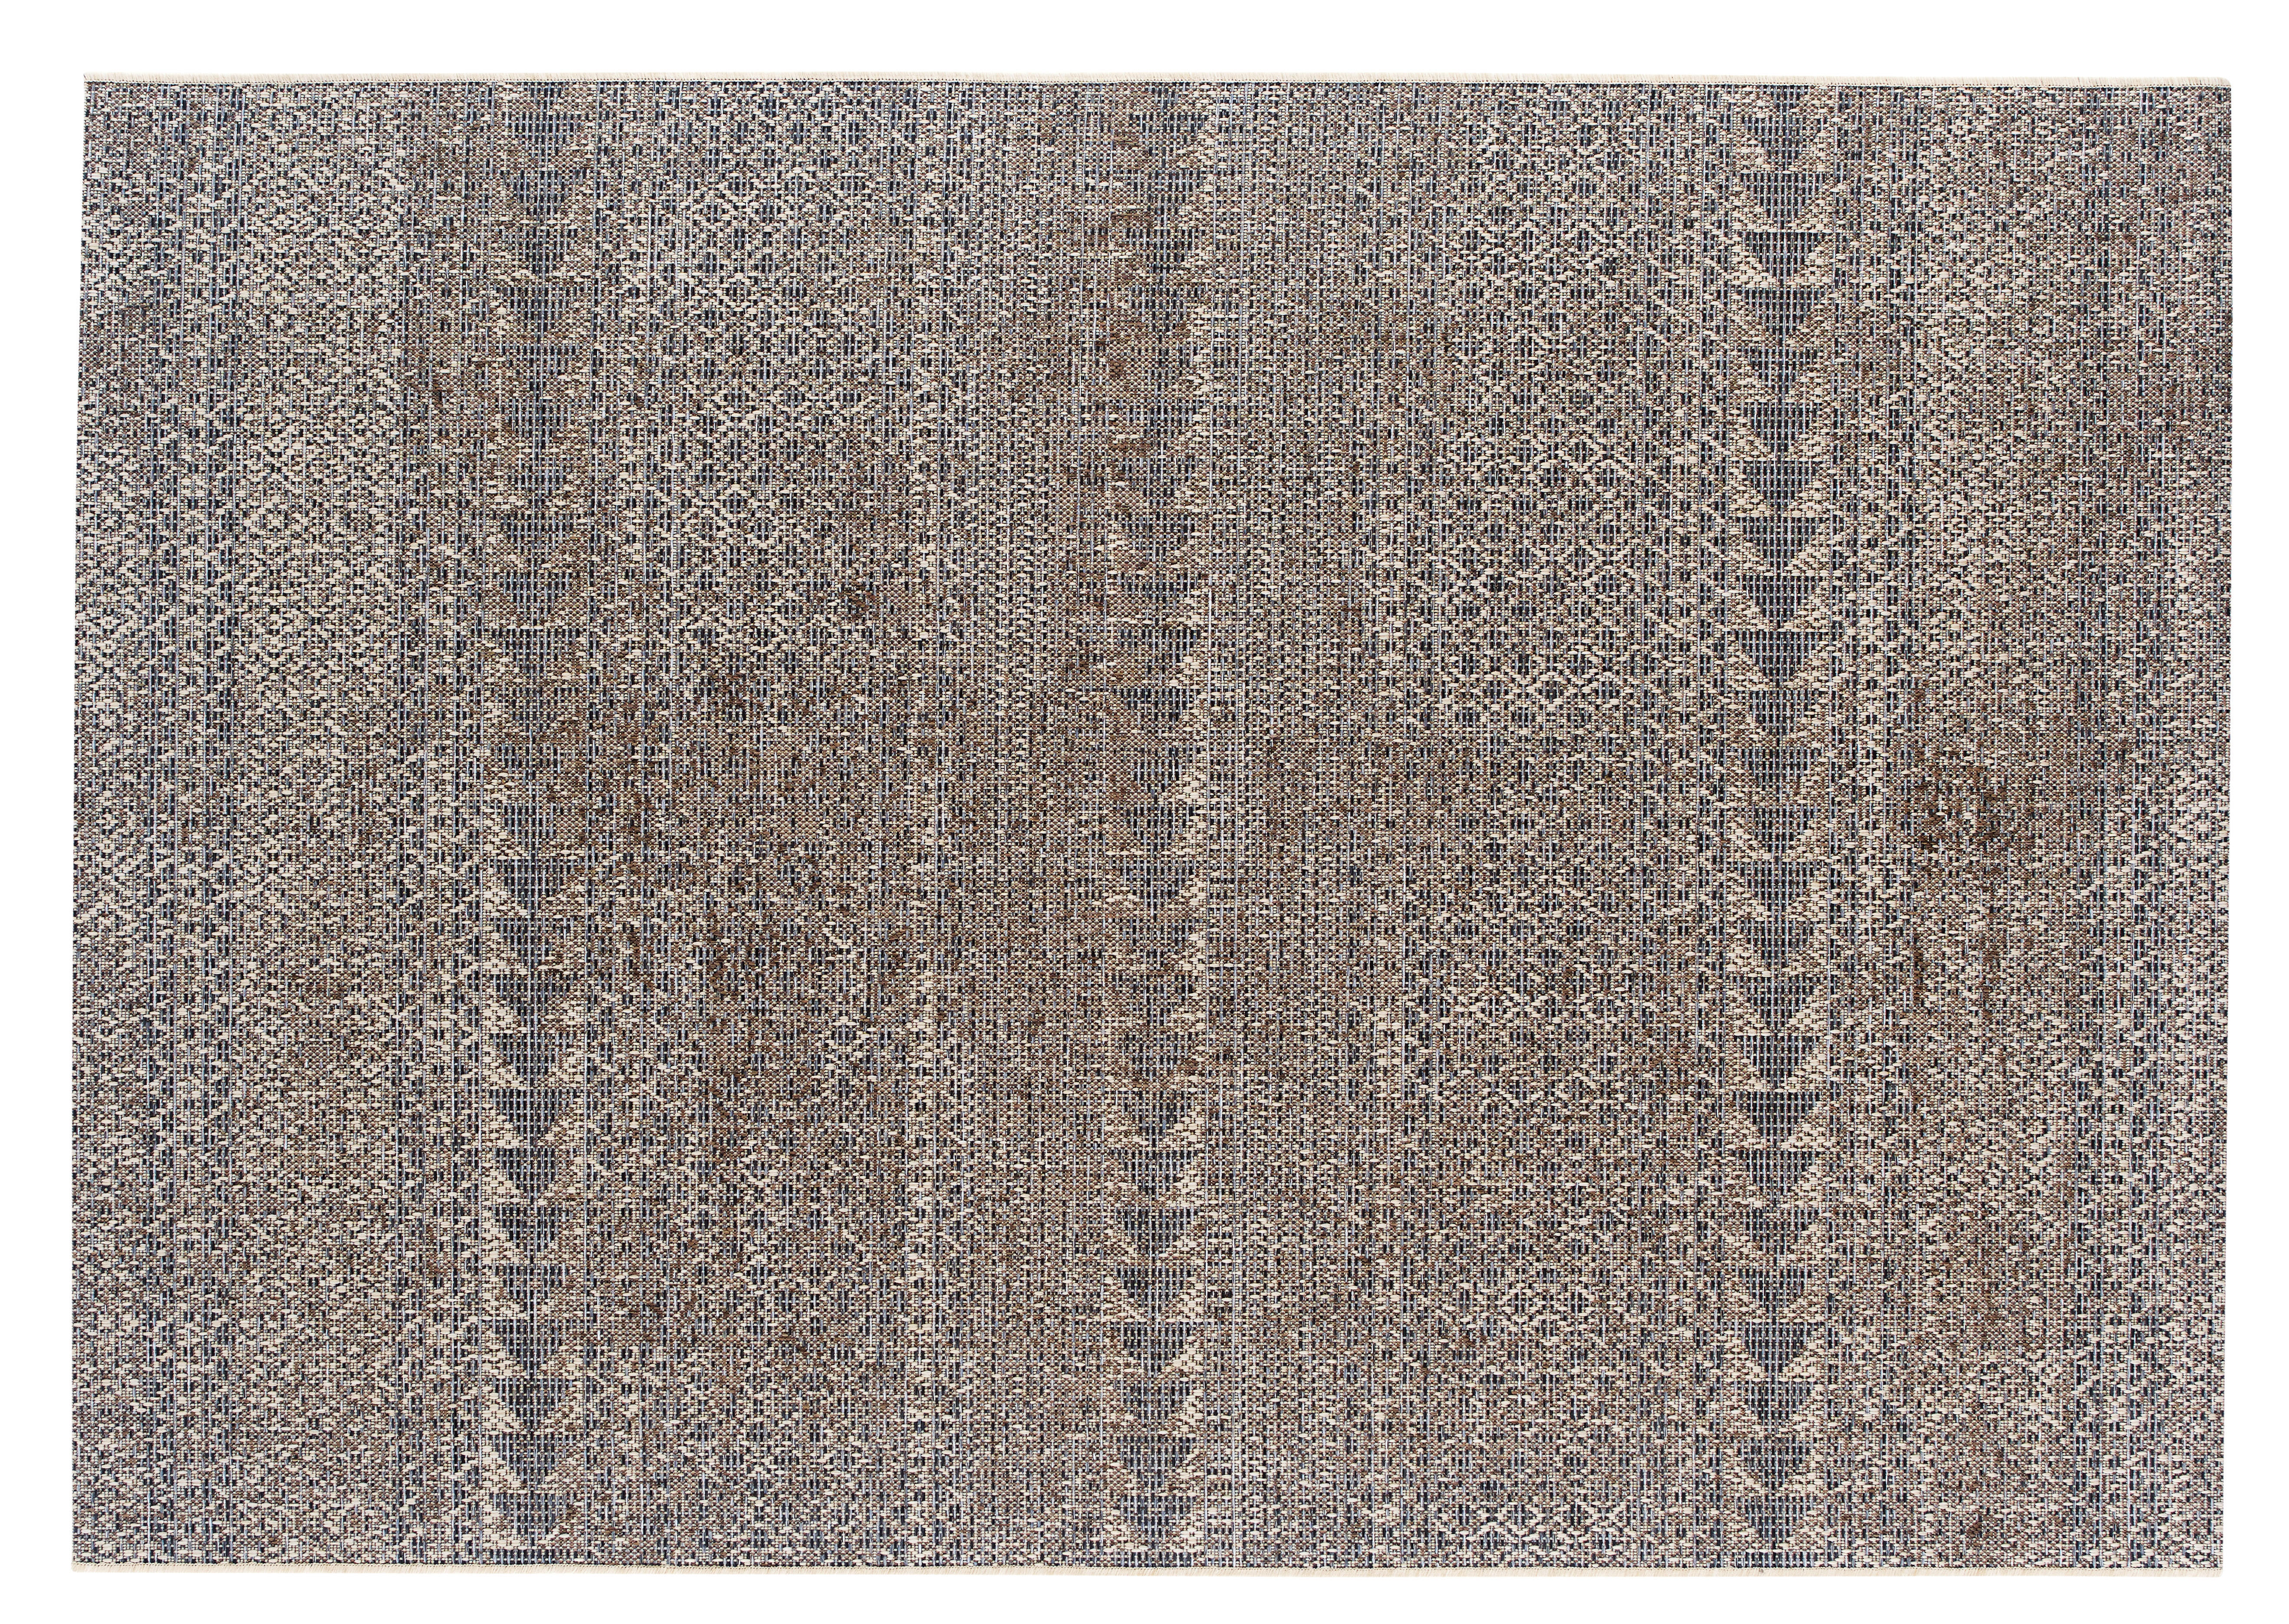 OUTDOORTEPPICH 160/230 cm  - Braun/Grau, Basics, Textil (160/230cm) - Sieger